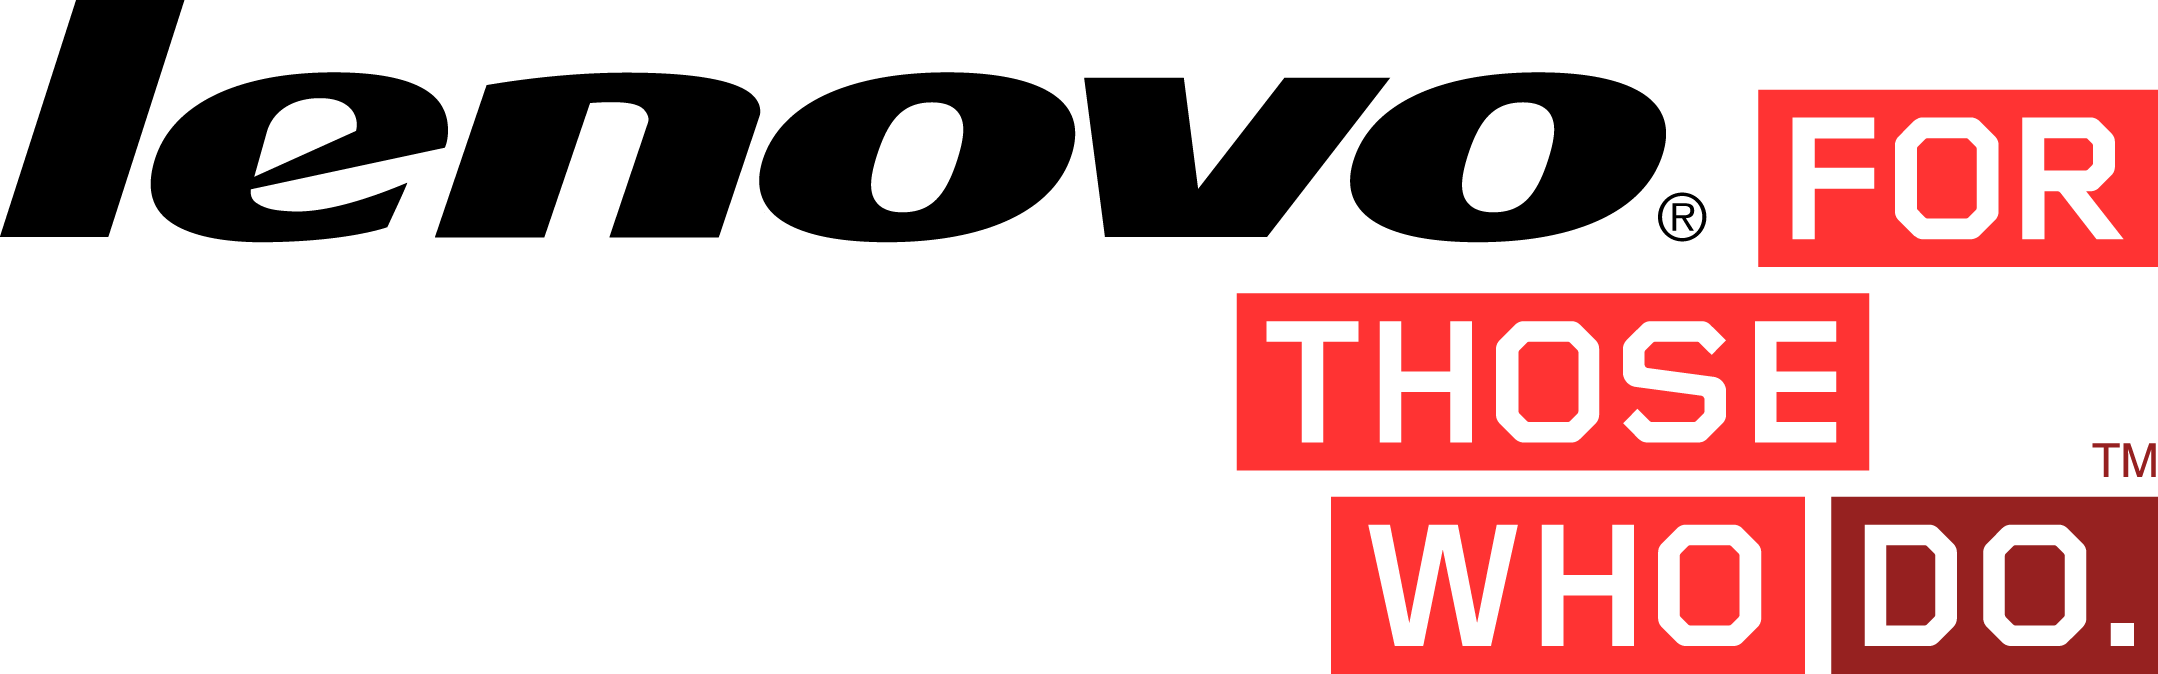 Lenovo Yoga Logo - LogoDix